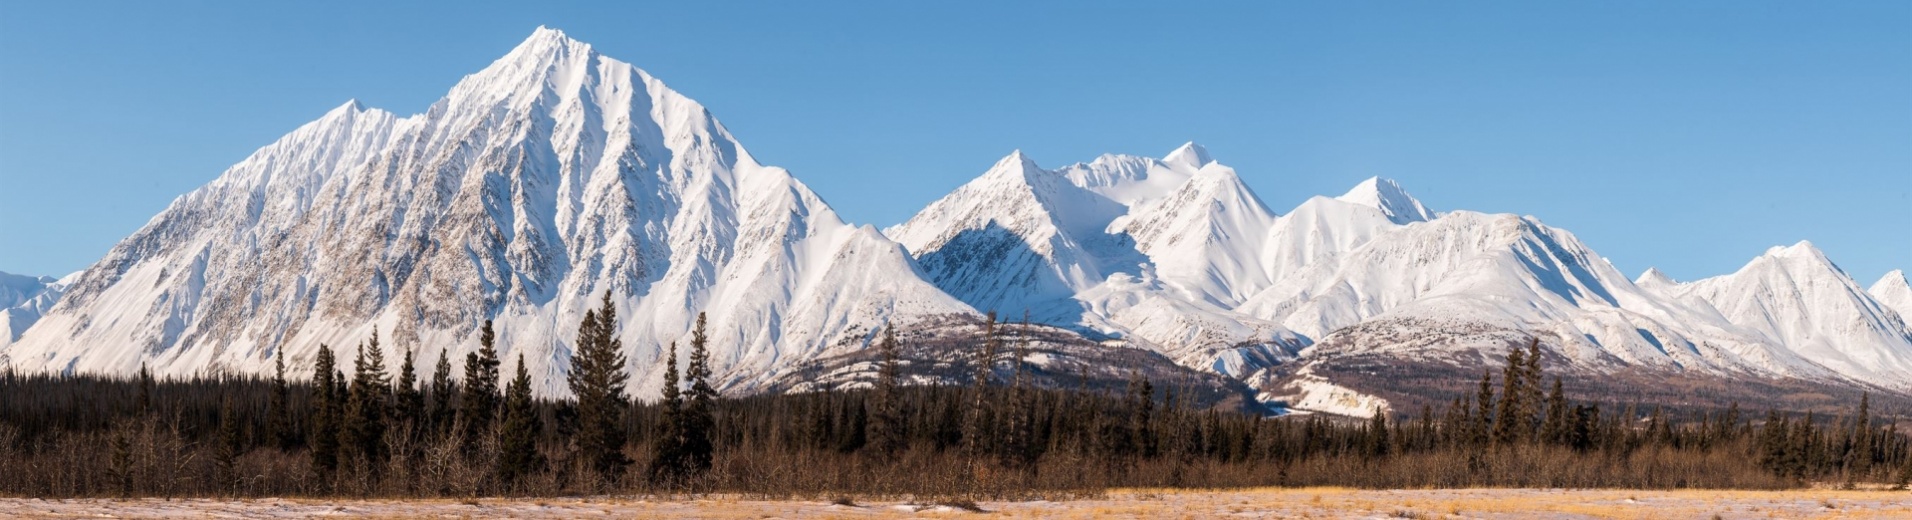 vue-montagnes-enneigees-yukon-canada